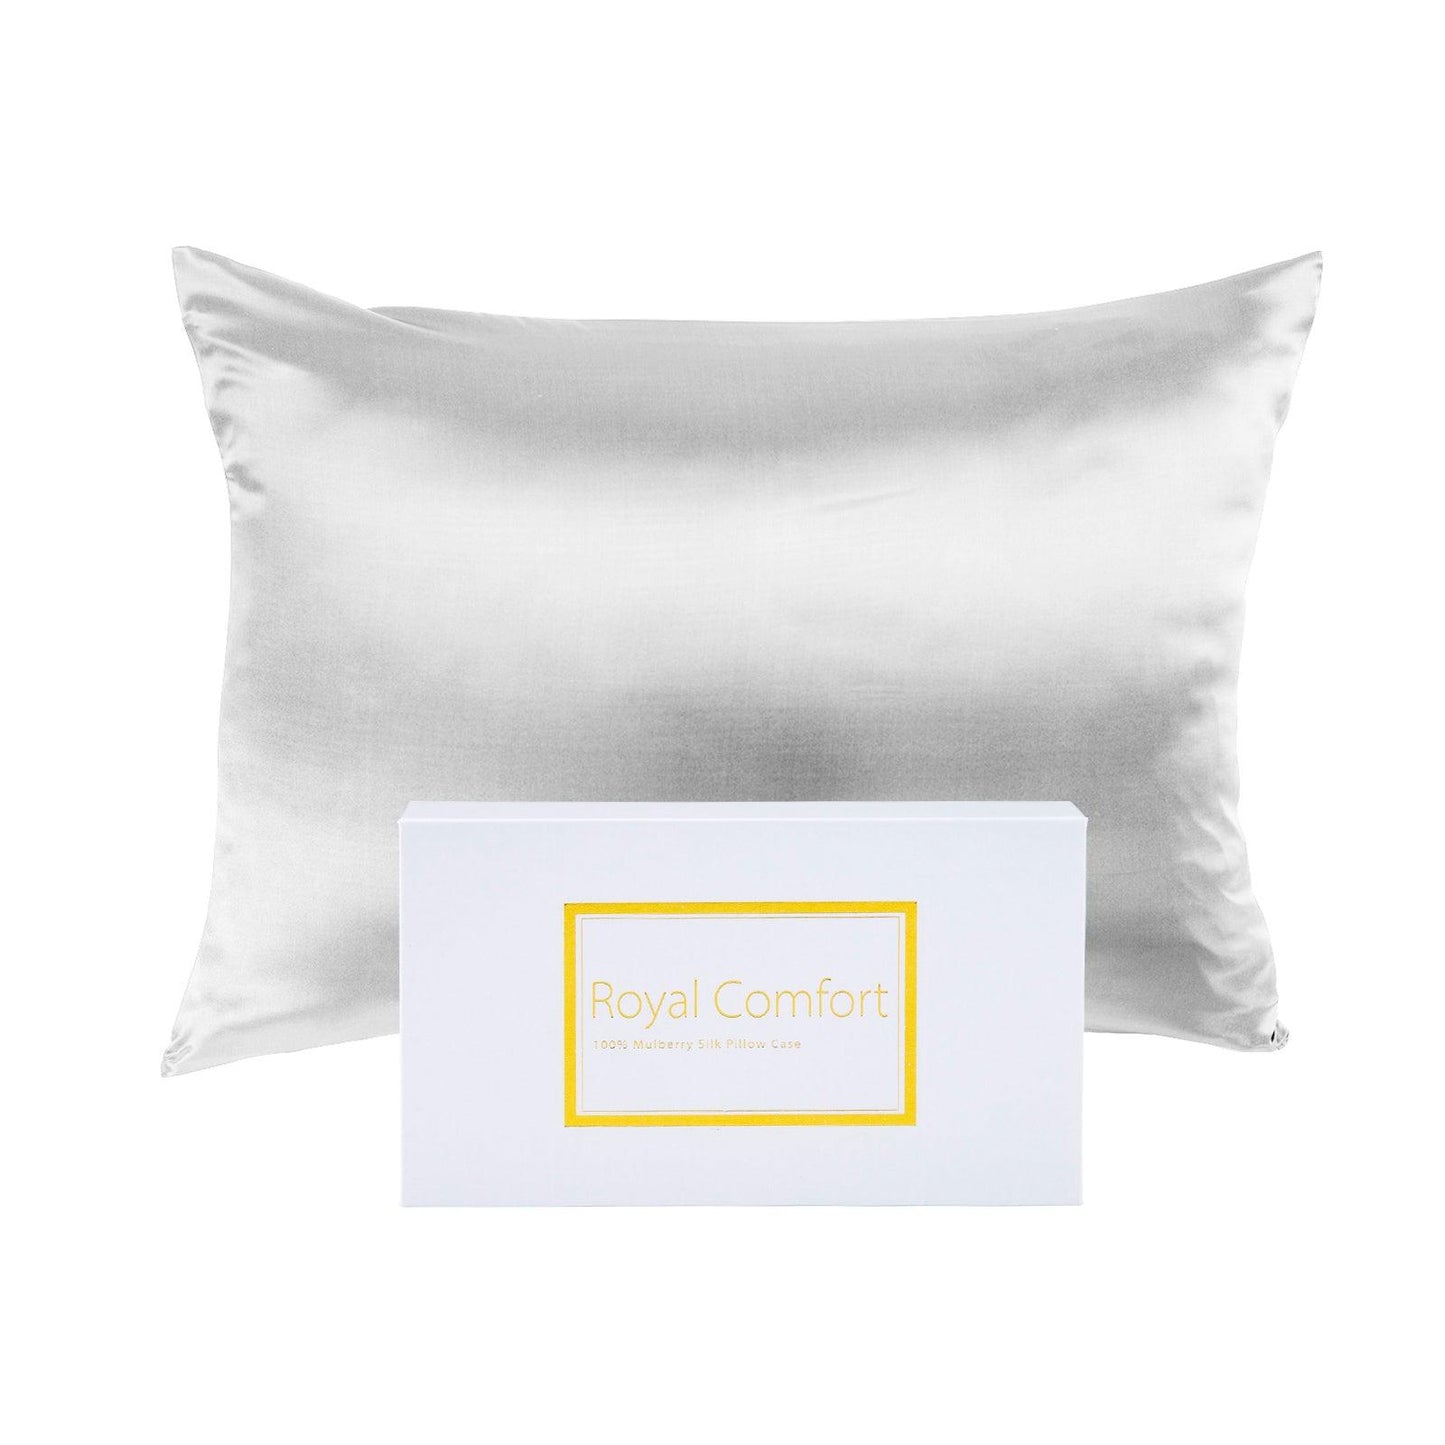 Royal Comfort Pure Silk Pillow Case 100% Mulberry Silk Hypoallergenic Pillowcase - Silver